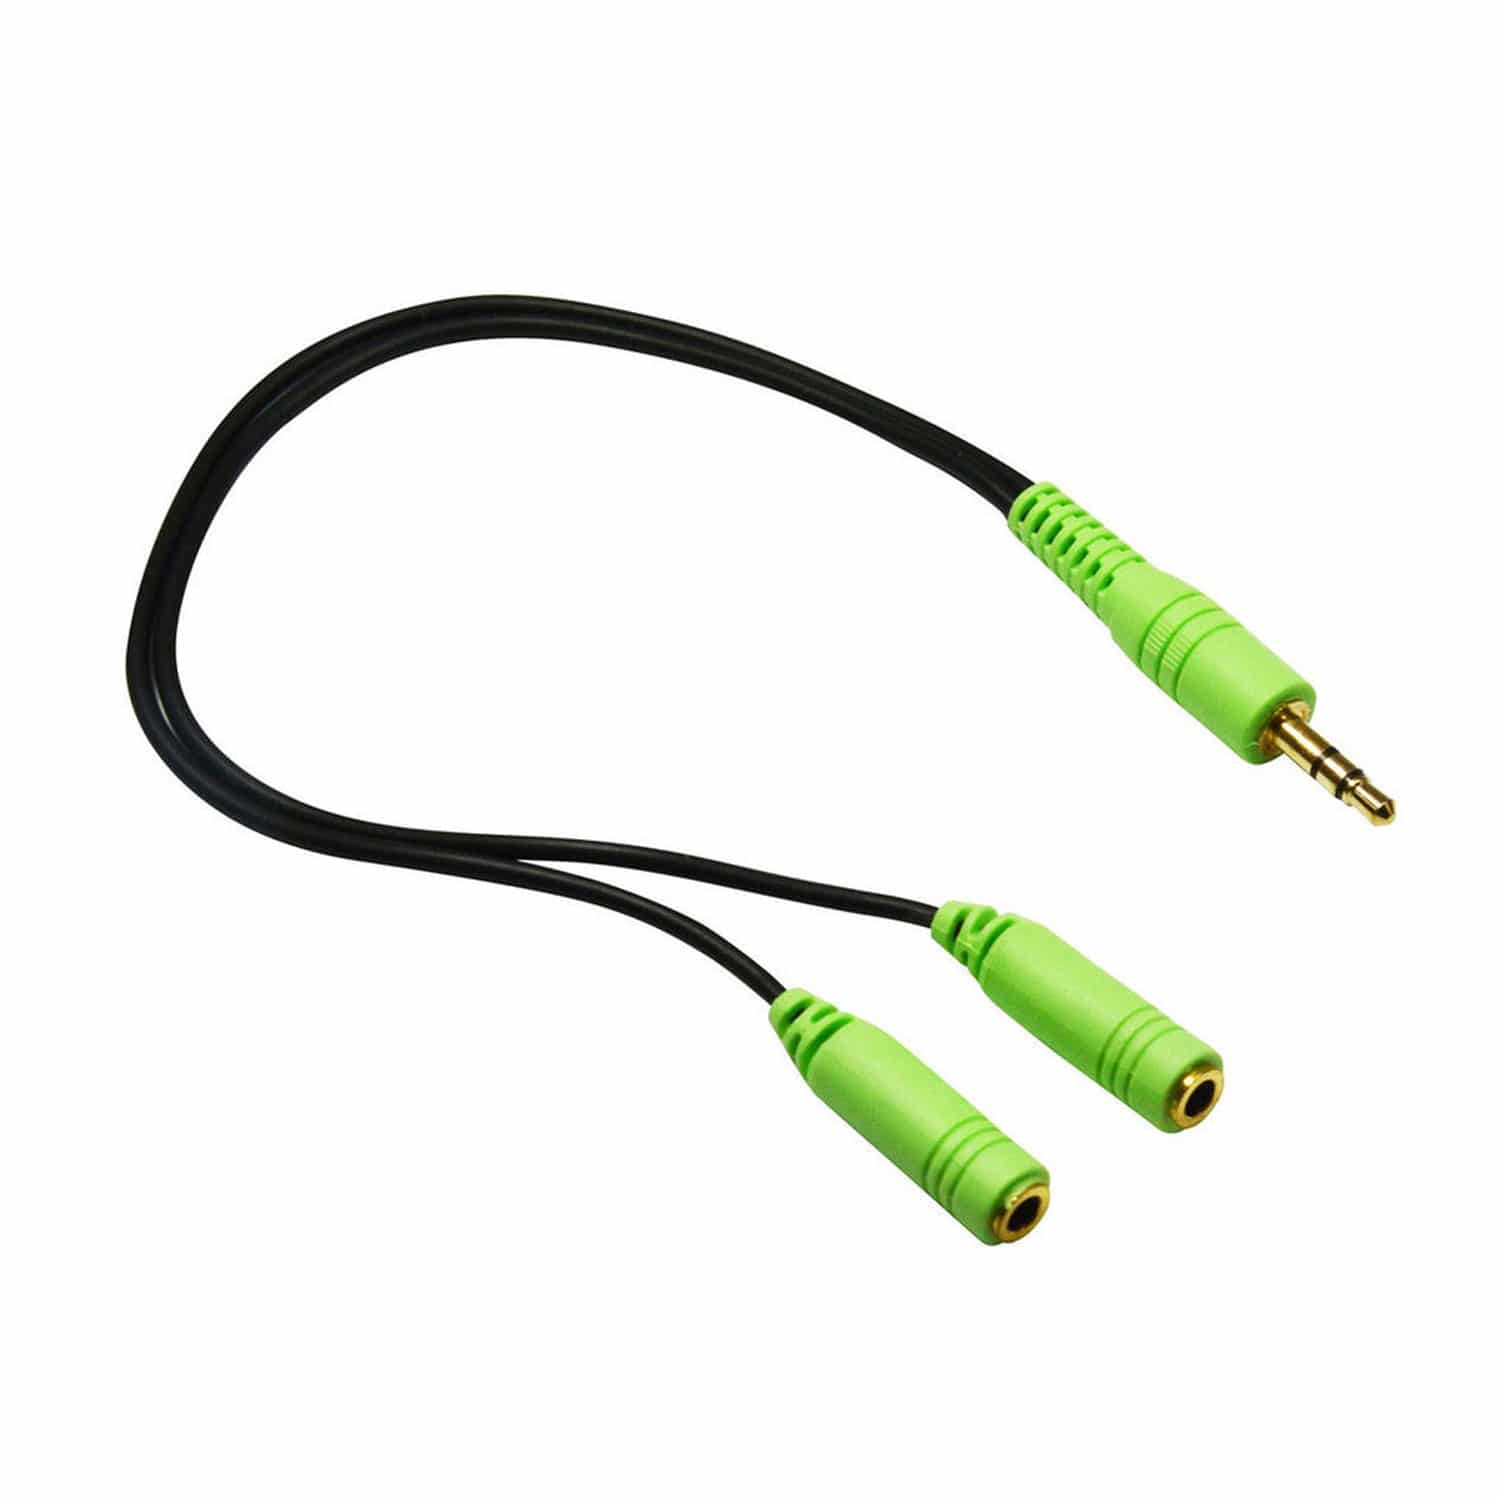 BT-875 Wireless Bluetooth® Stereo Headphones - Andrea Communications